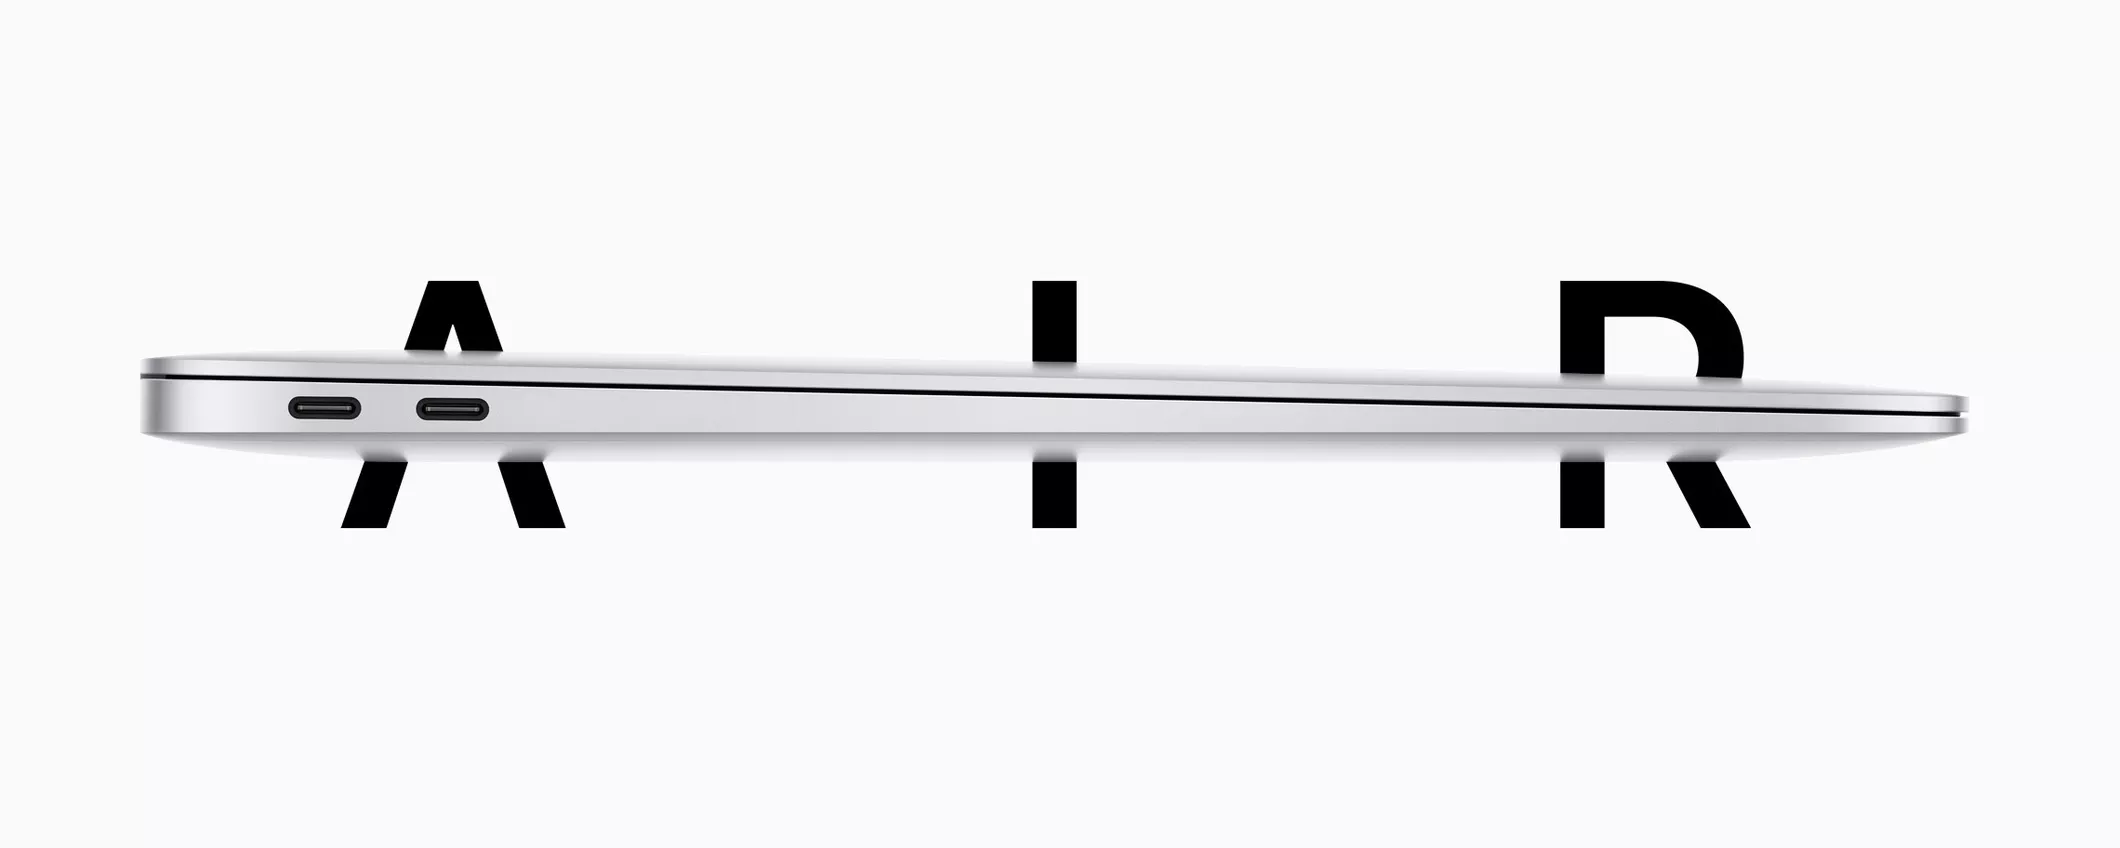 Apple lancia i nuovi MacBook Air